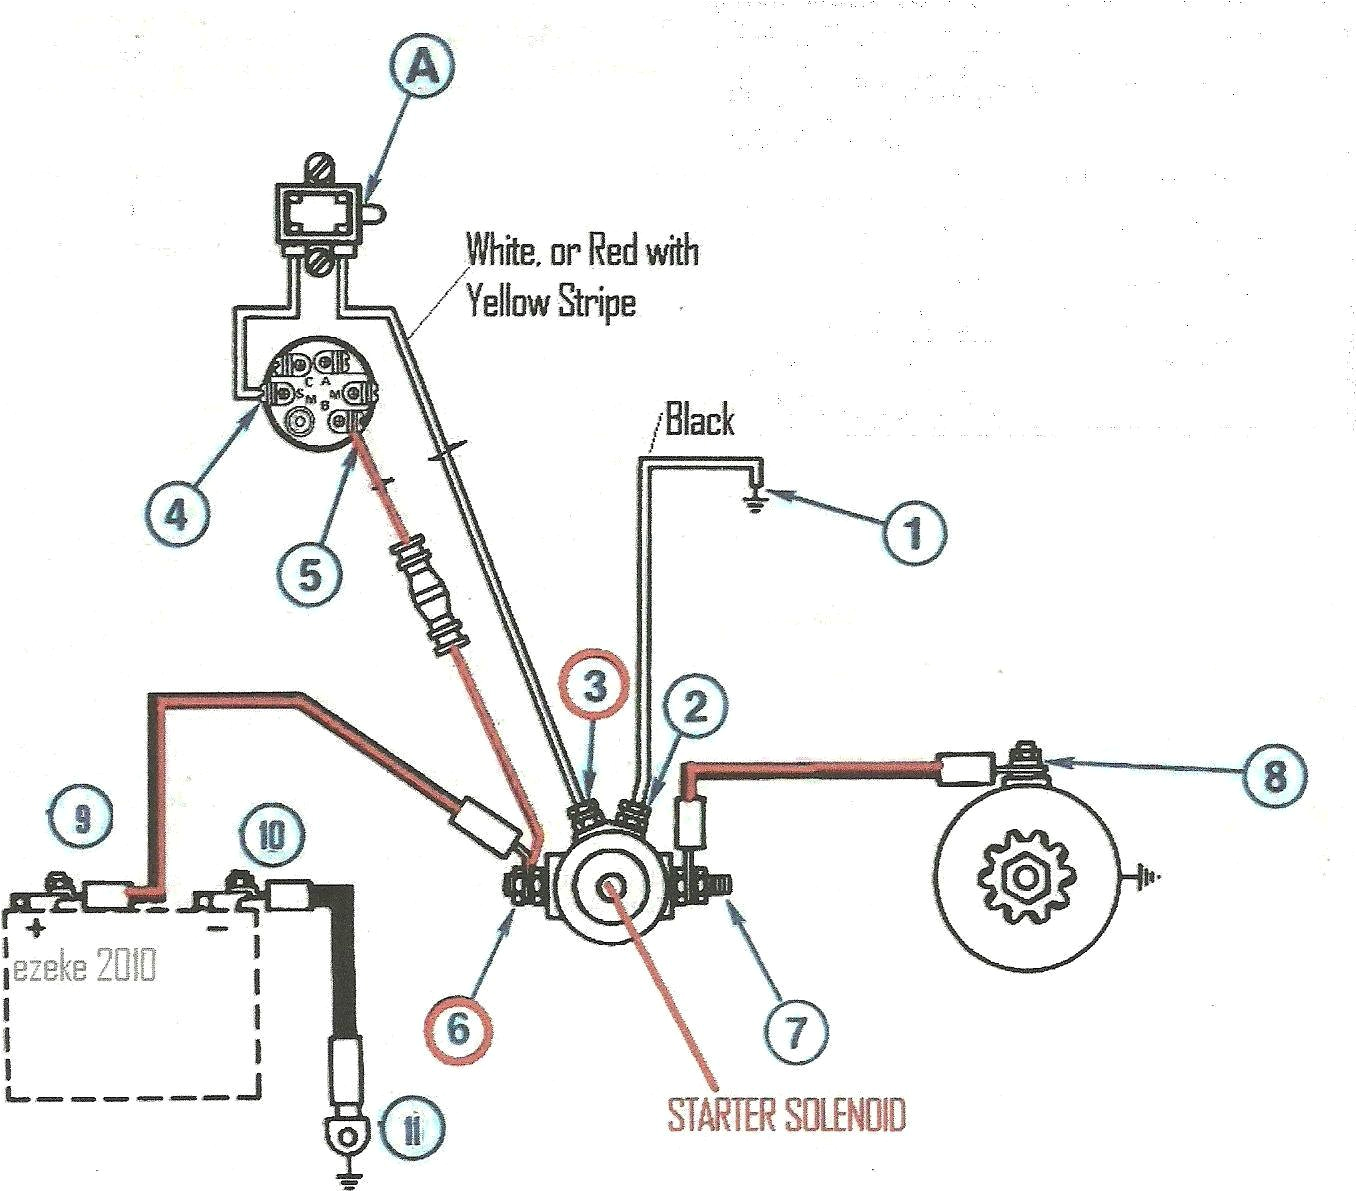 remote starter solenoid wiring diagram britishpanto lively gm jpg